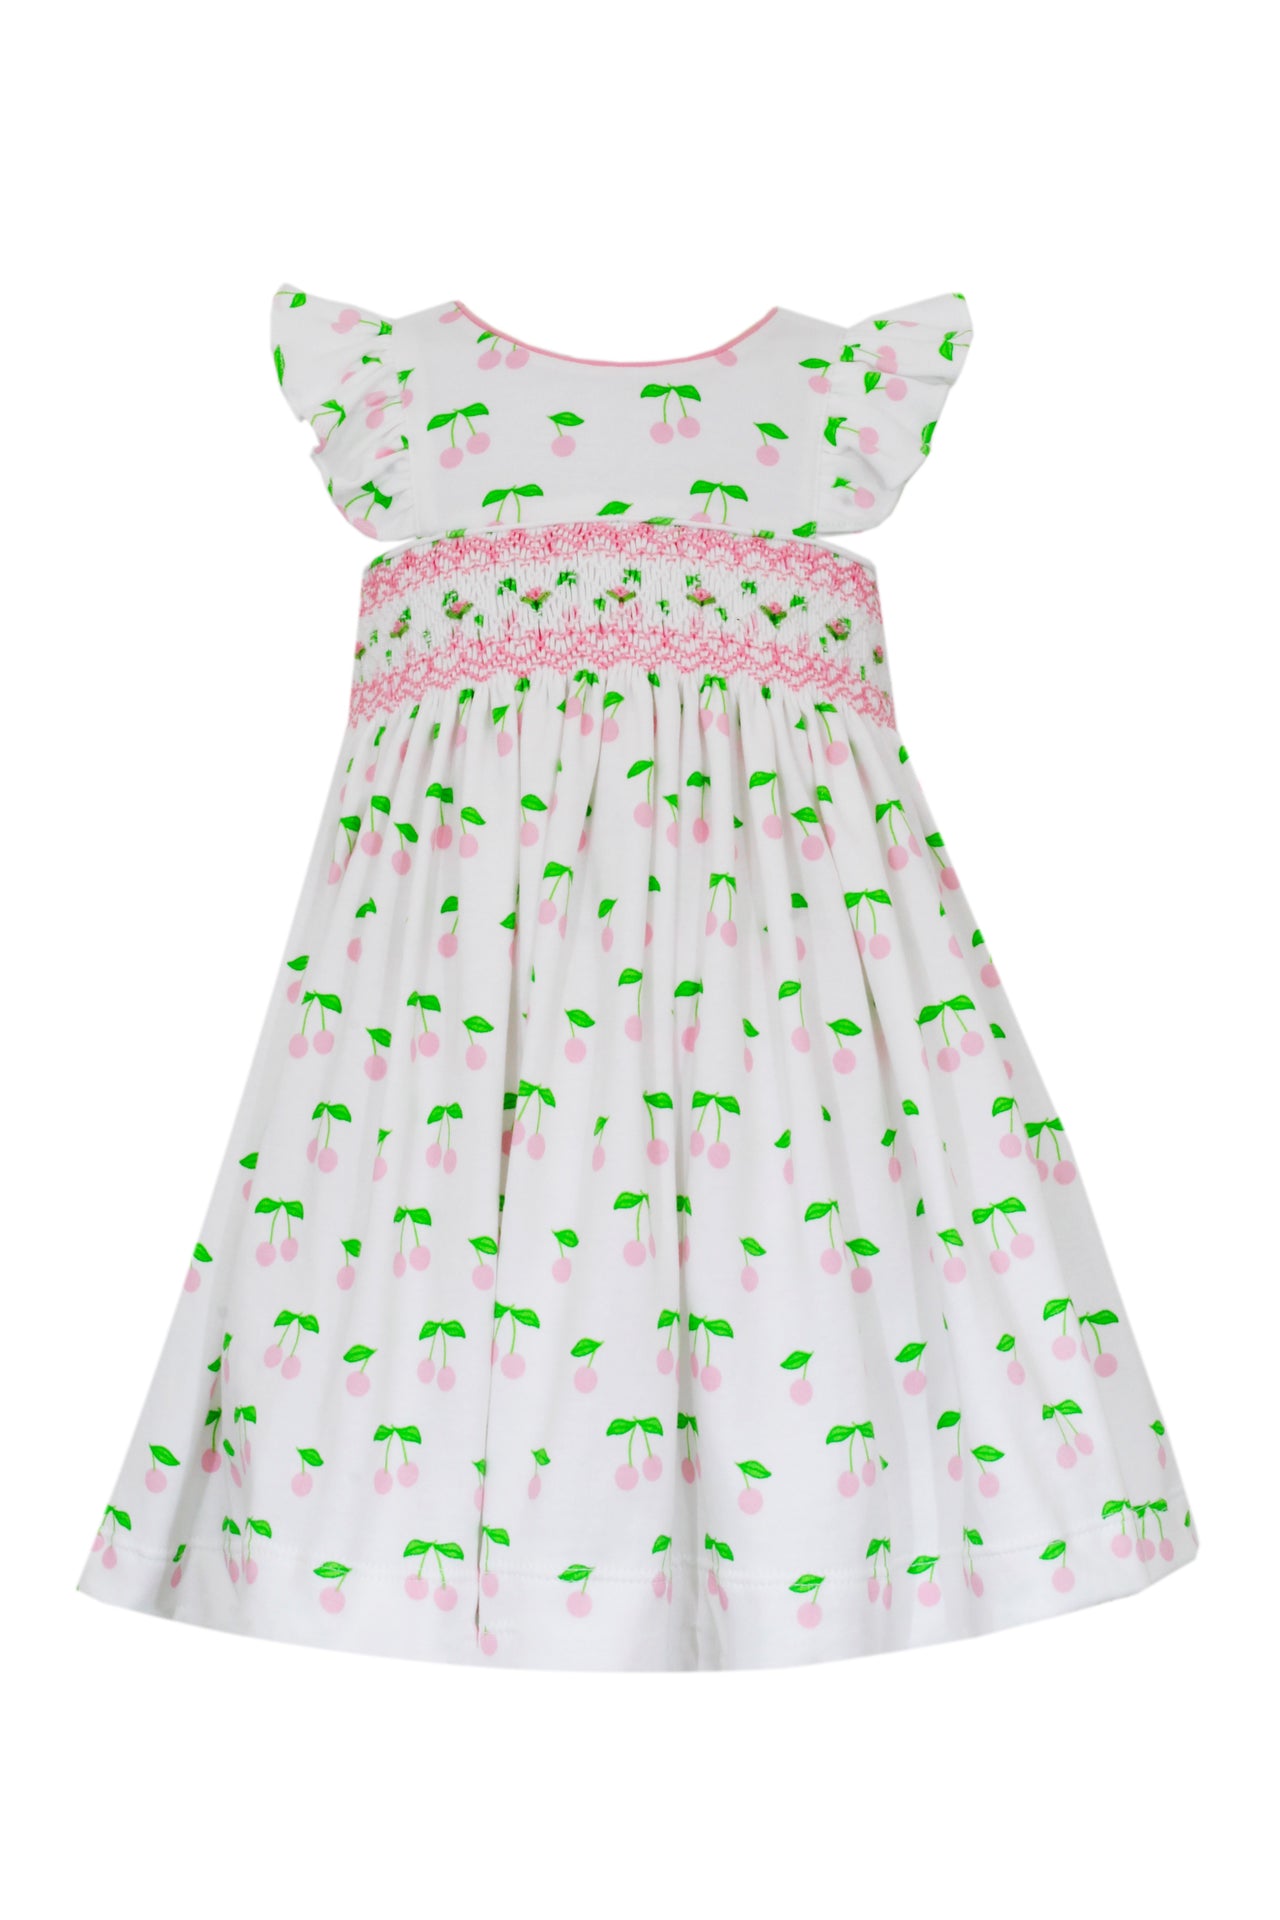 Petit Bebe Cherry white &Pink Print Sleeveless Dress 408D-MS24 5103